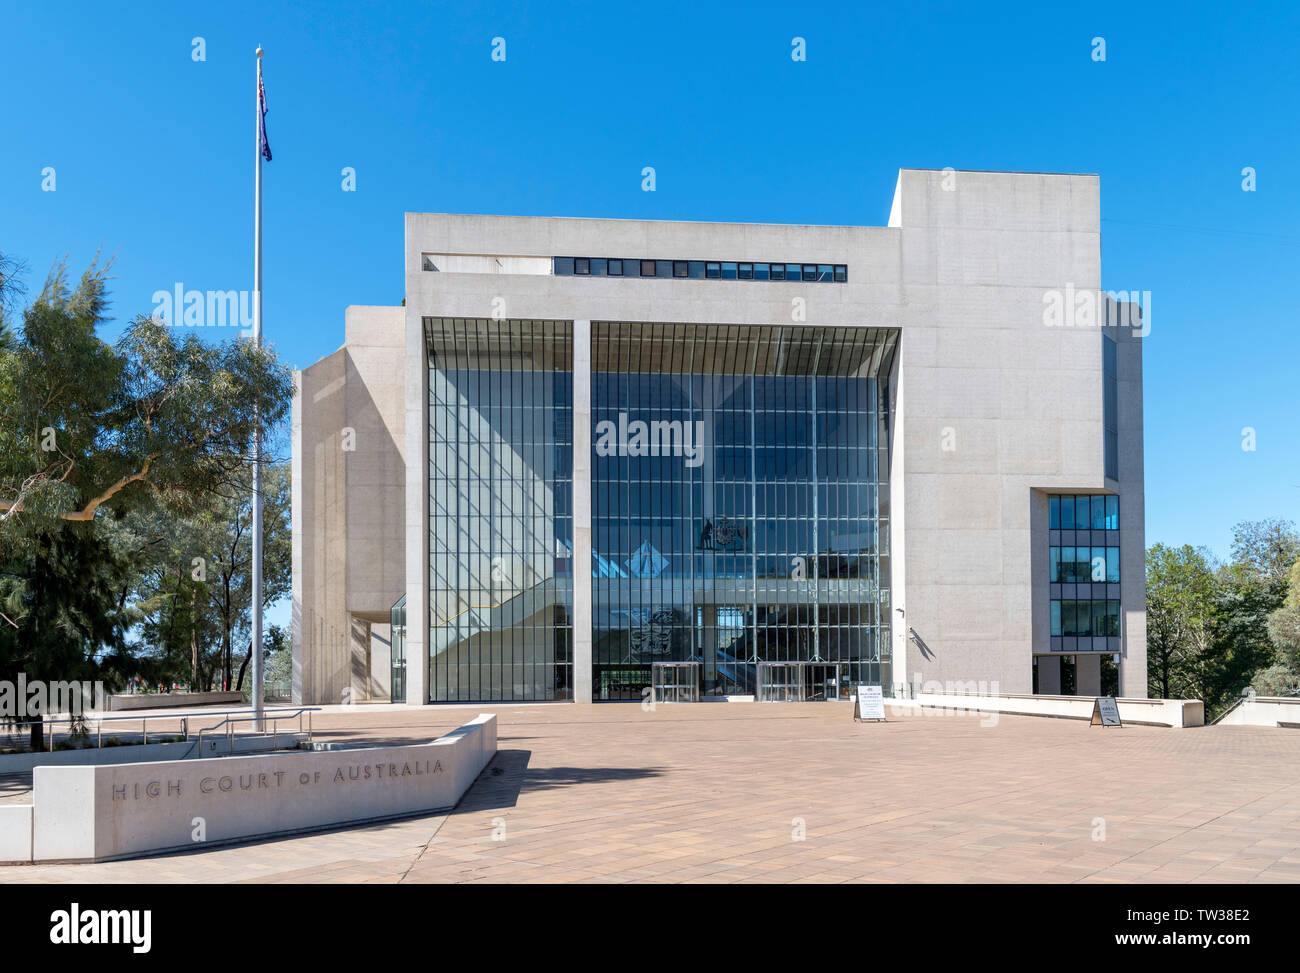 Das hohe Gericht von Australien, Parlamentarischen Dreieck, Canberra, Australian Capital Territory, Australien Stockfoto